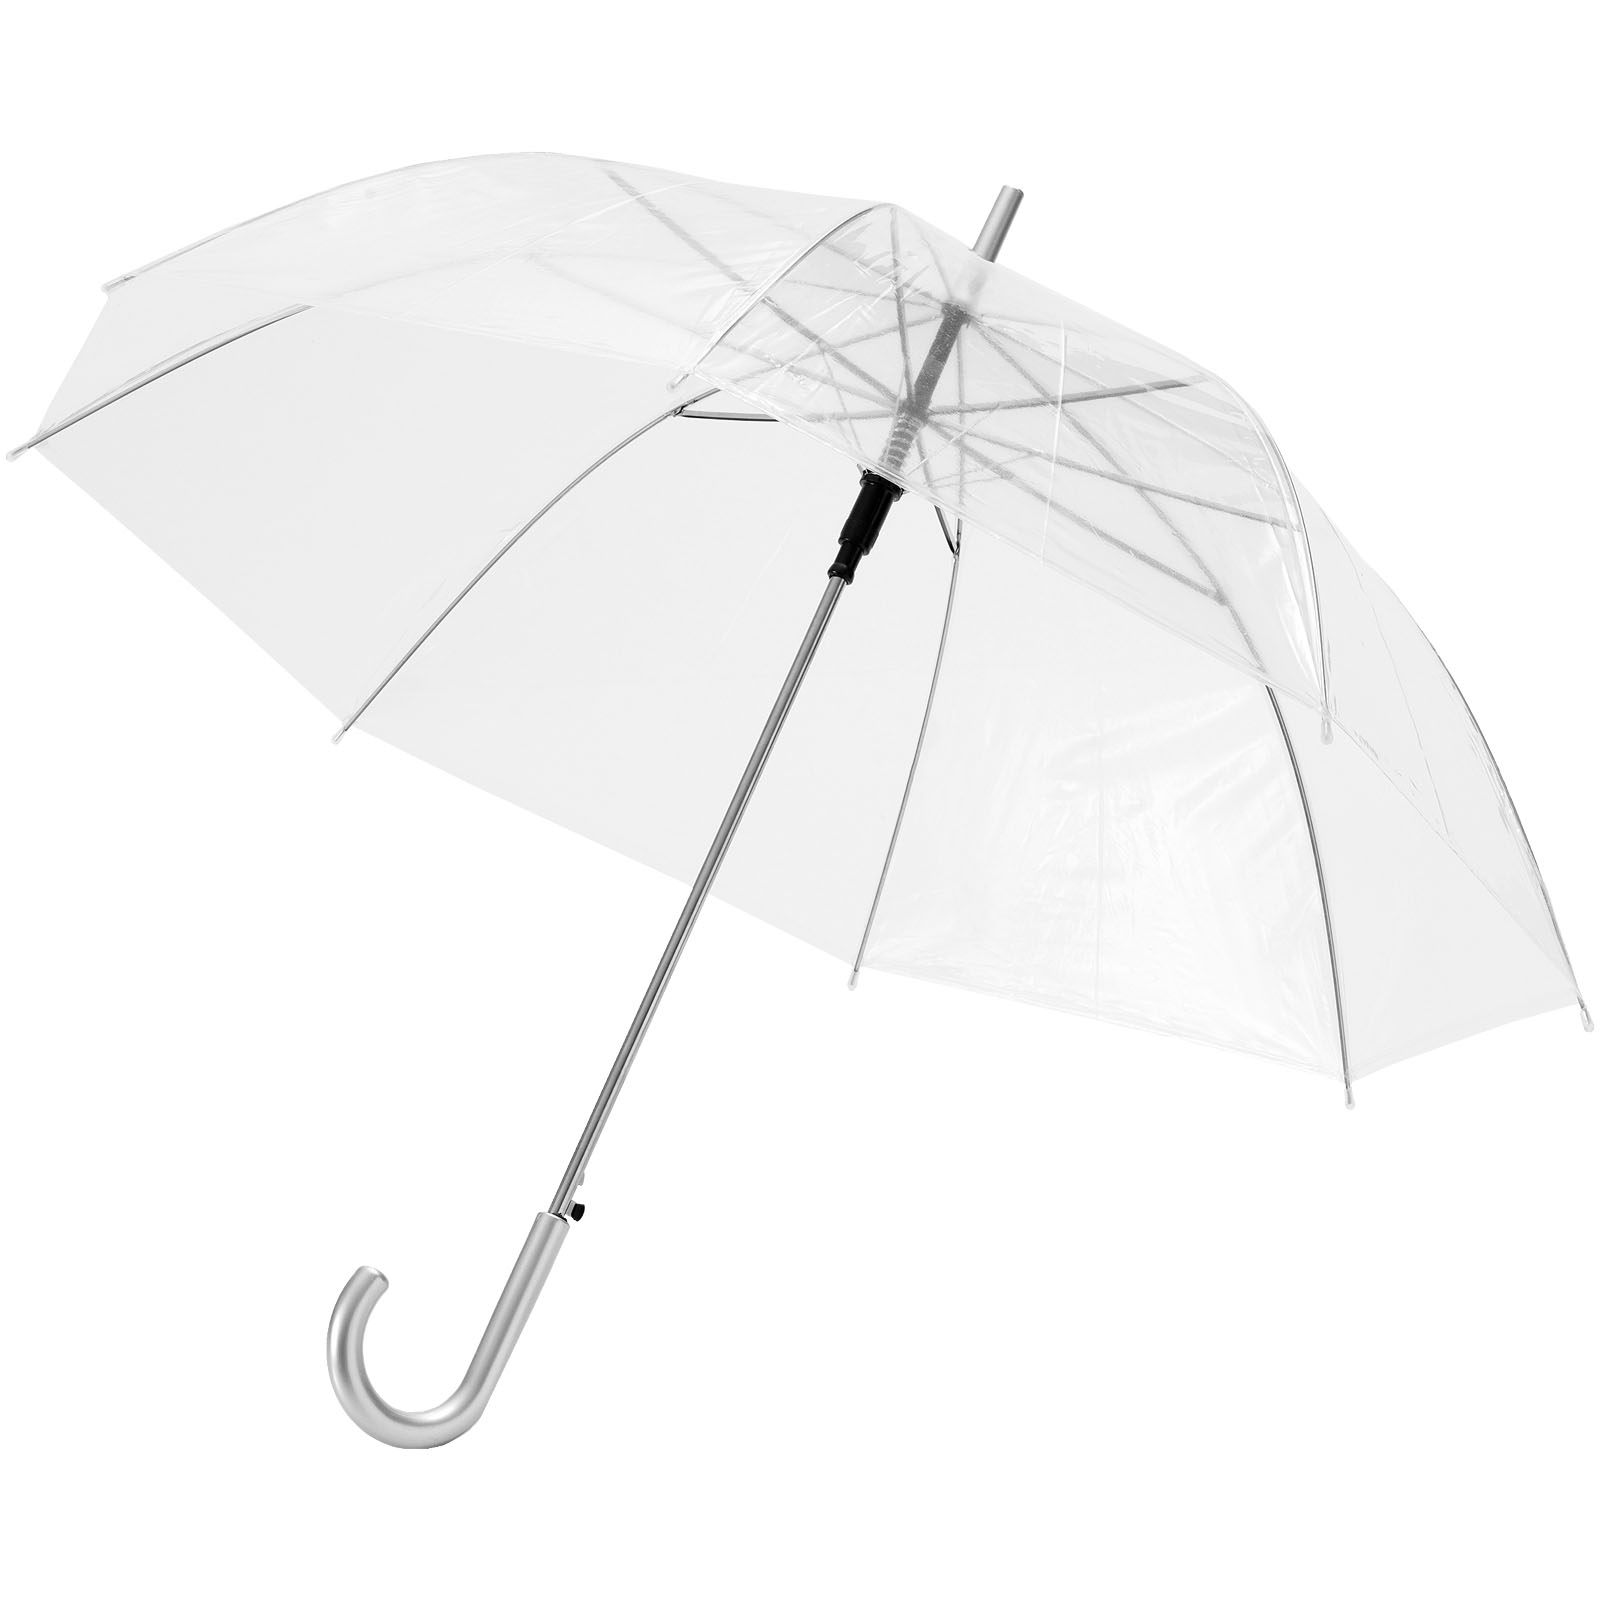 Transparent automatic umbrella SIZY, 23 inches - transparent white